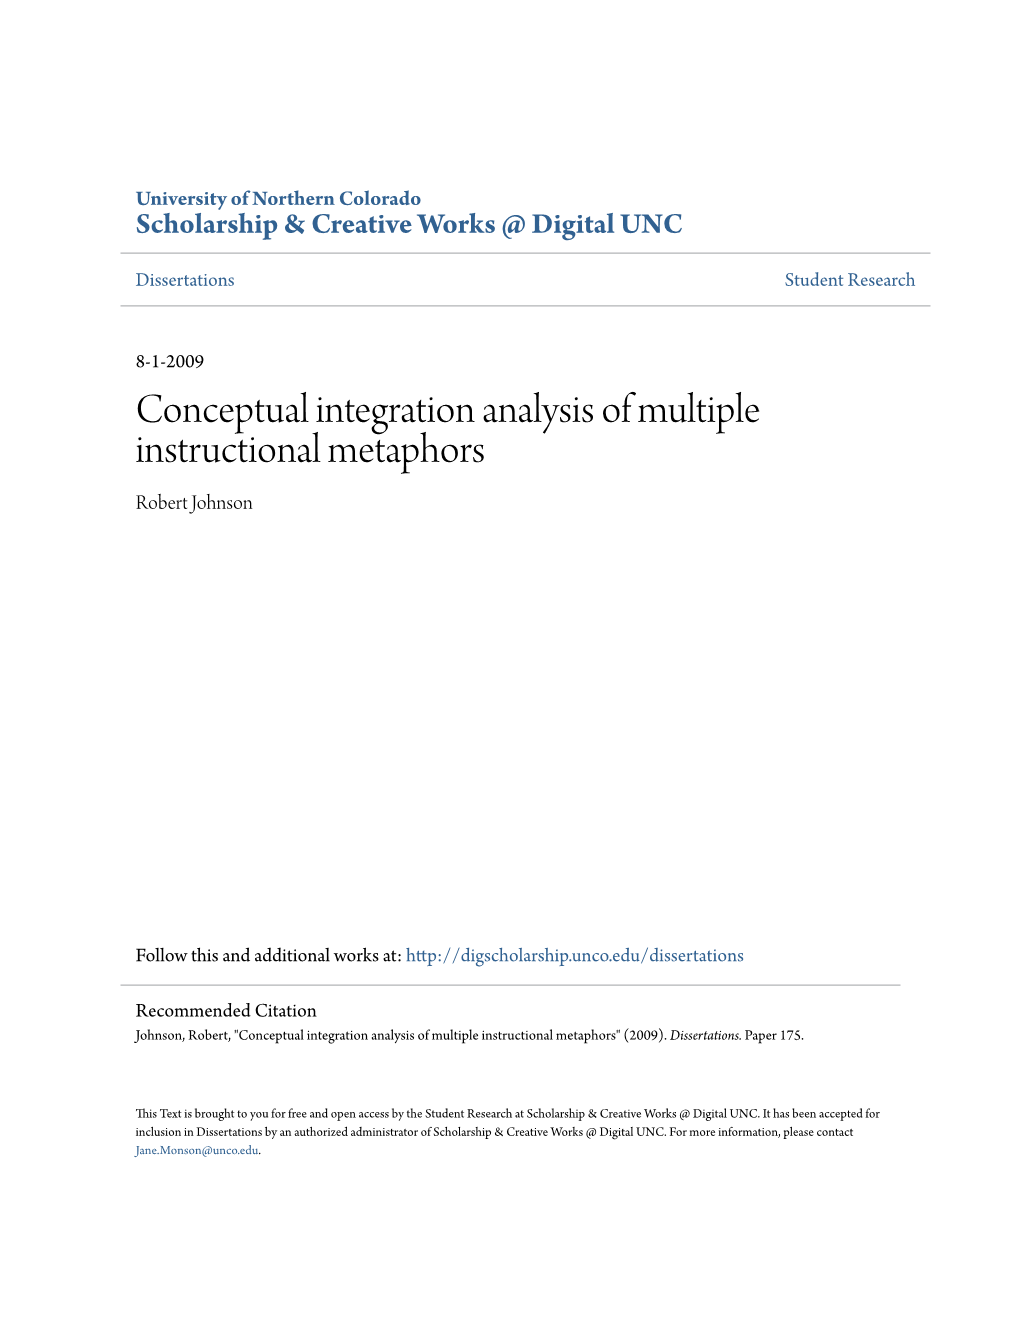 Conceptual Integration Analysis of Multiple Instructional Metaphors Robert Johnson